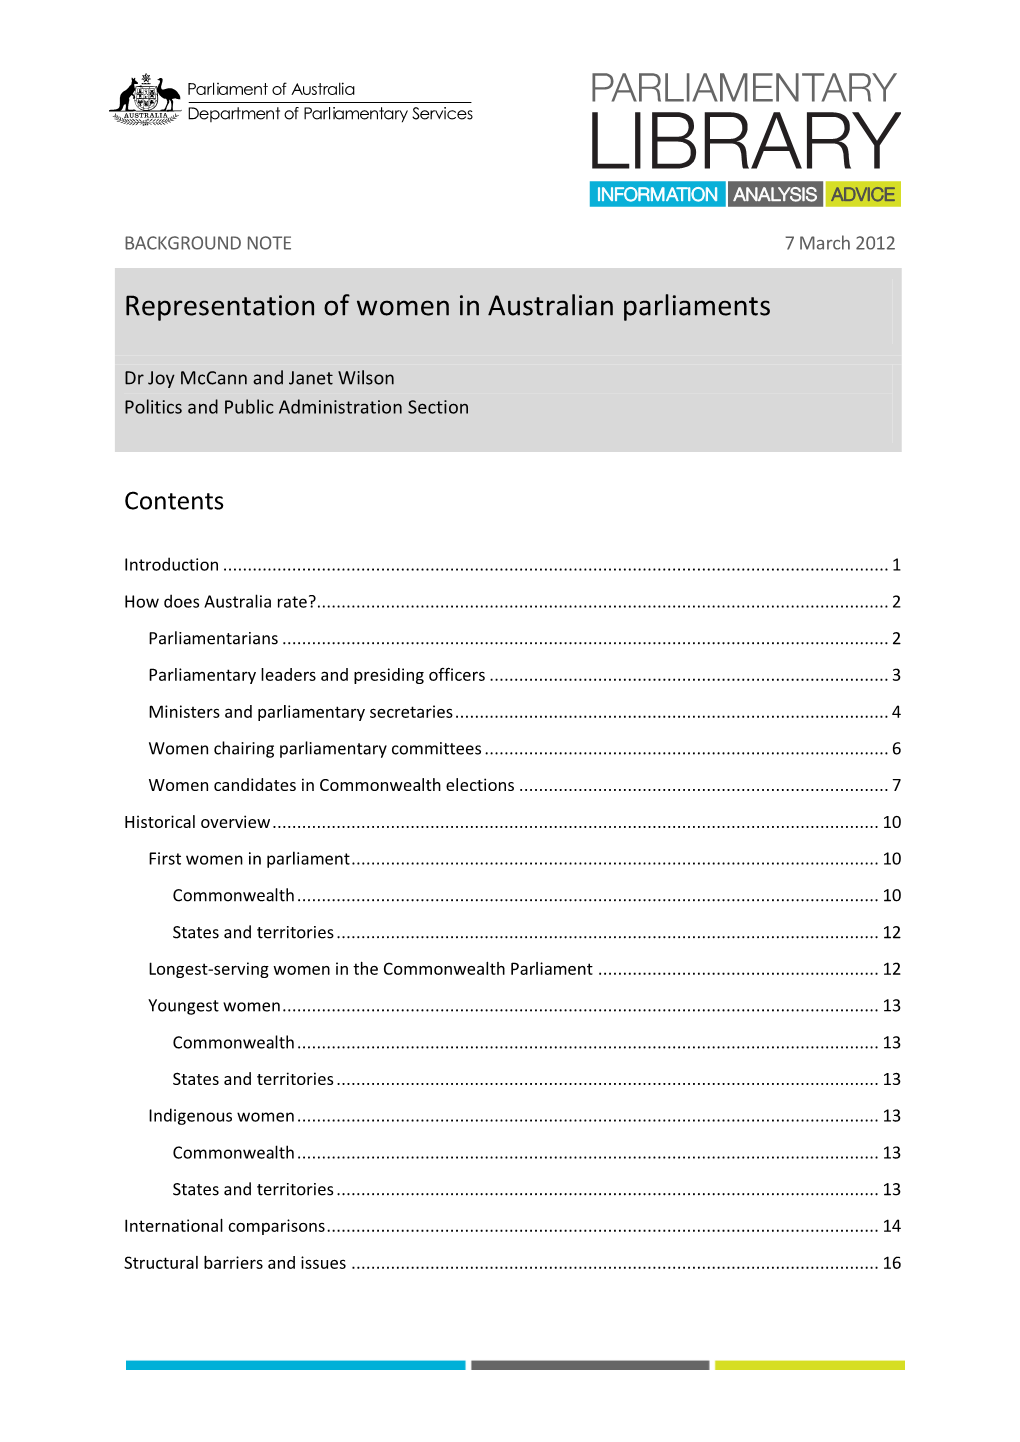 Representation of Women in Australian Parliaments